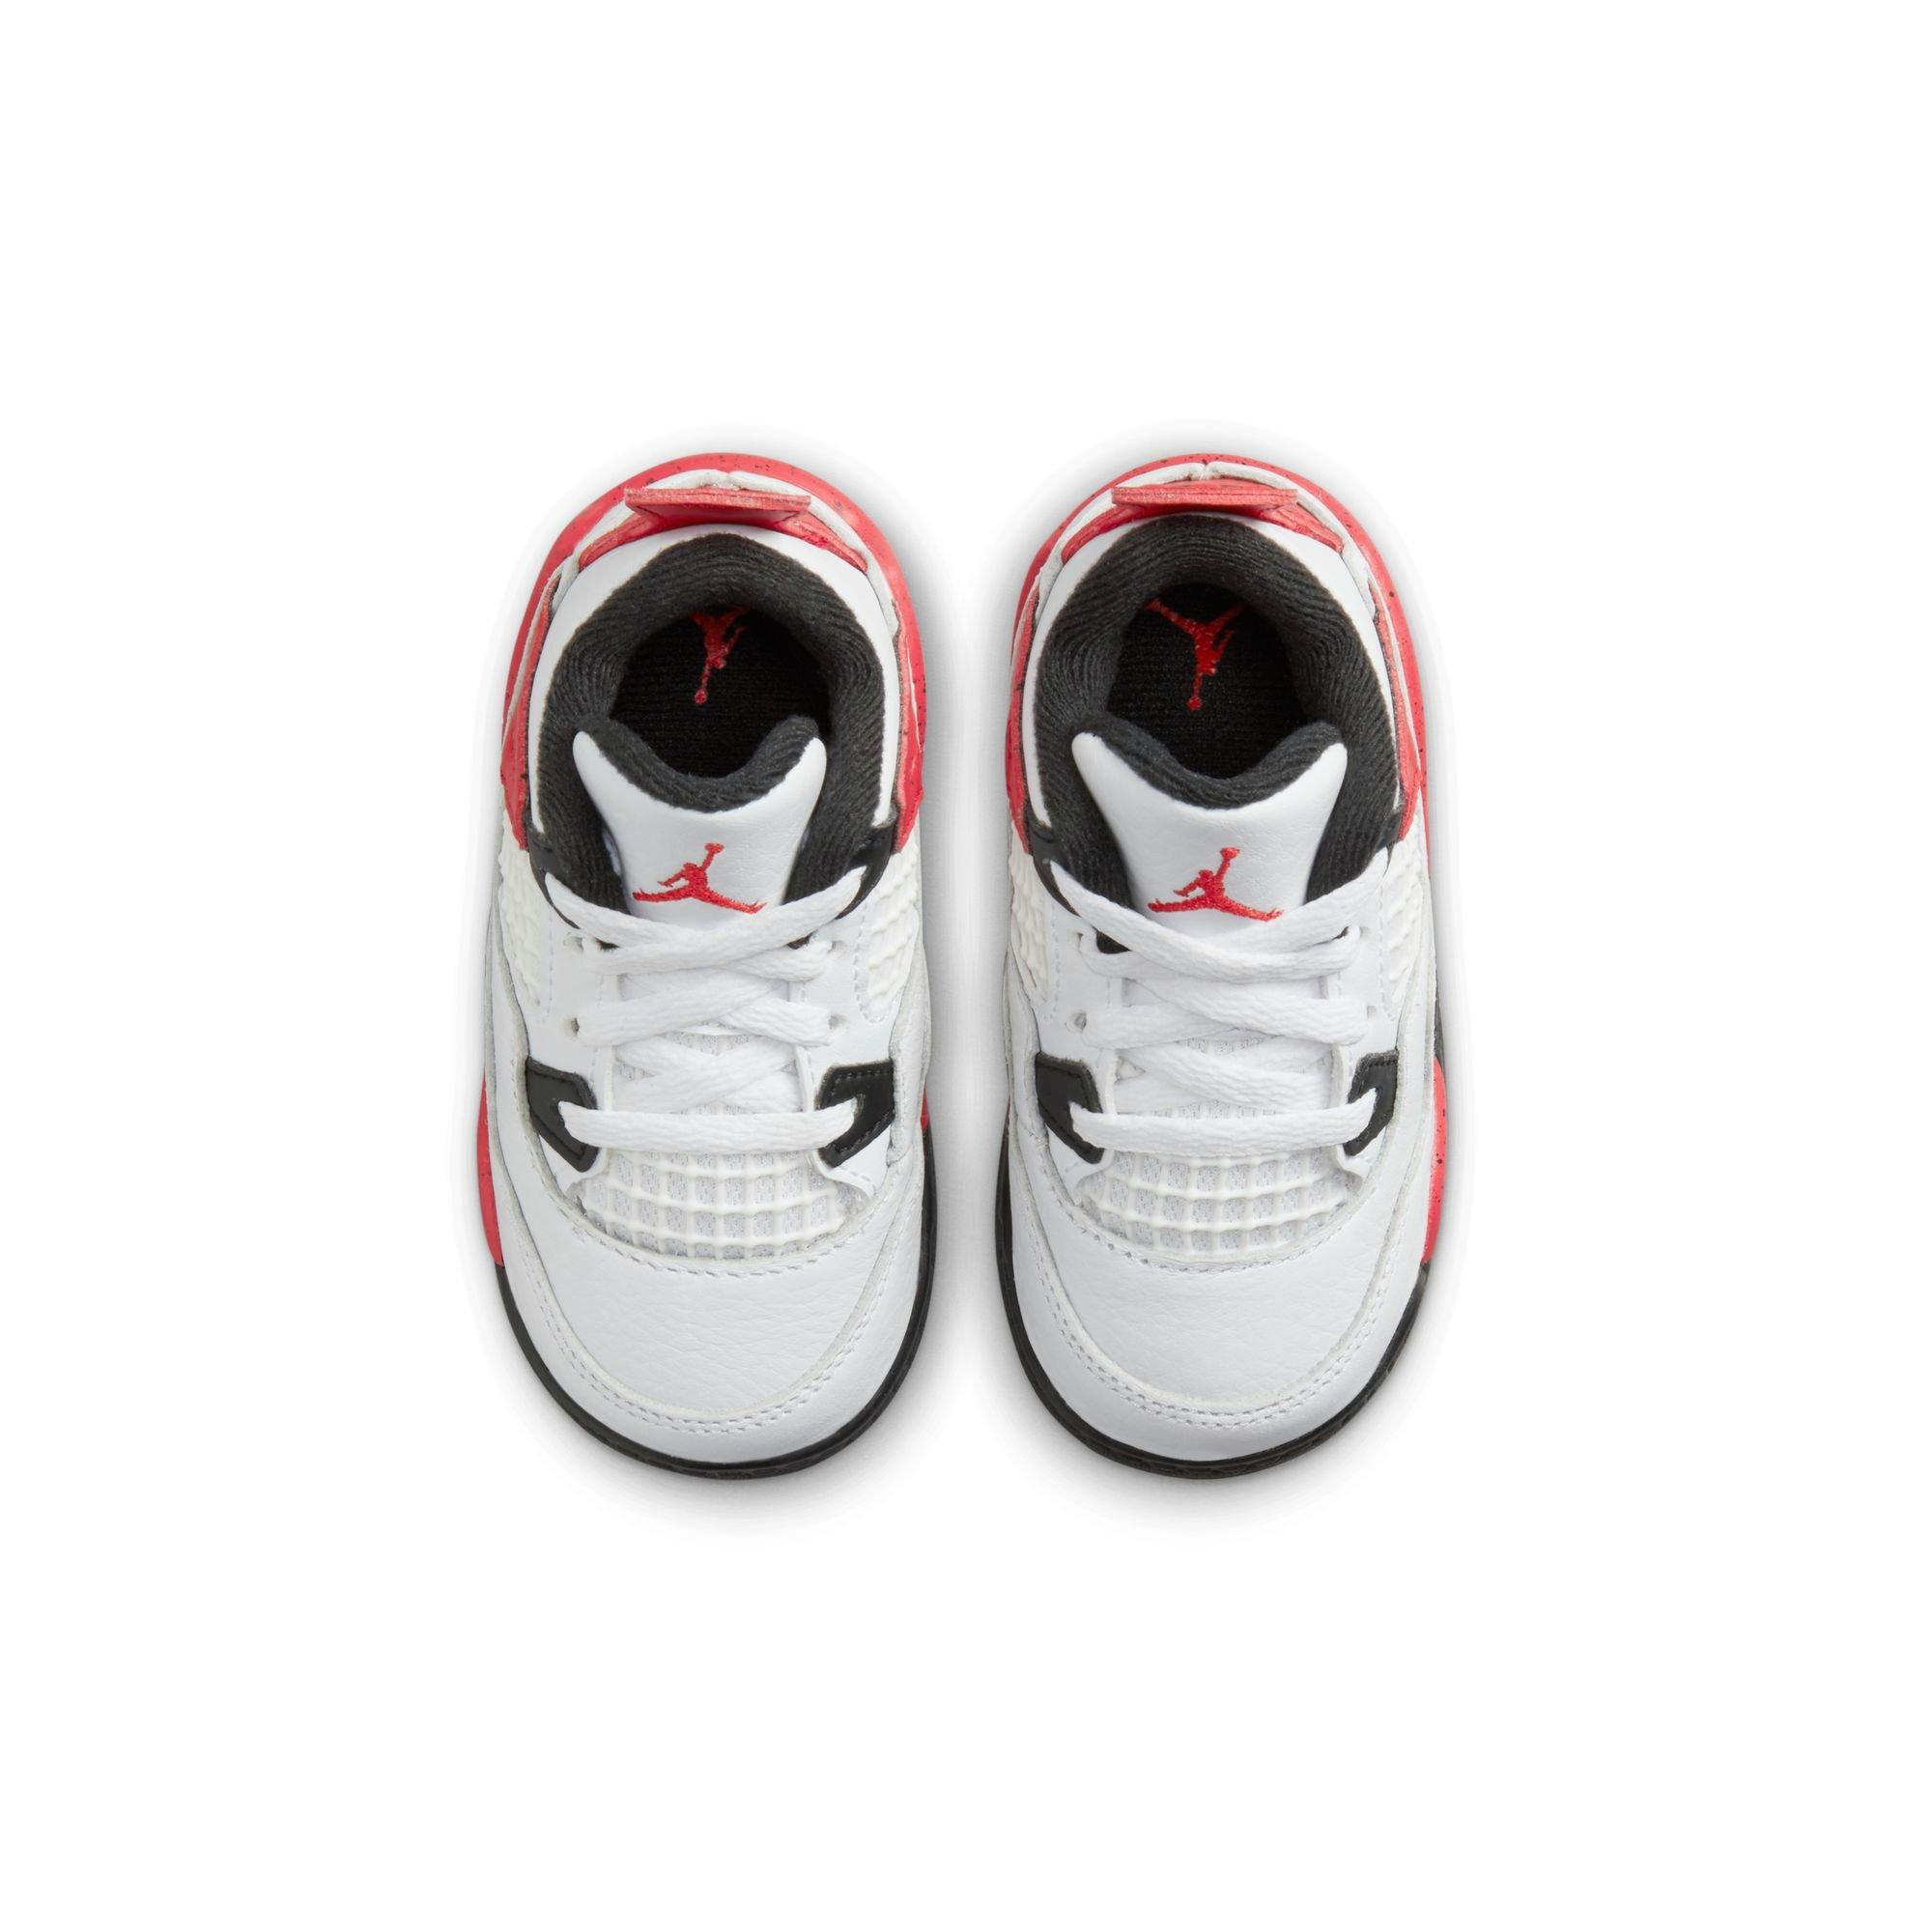 Tenis Casuales Air Jordan 4 Retro Red Cement de Niños